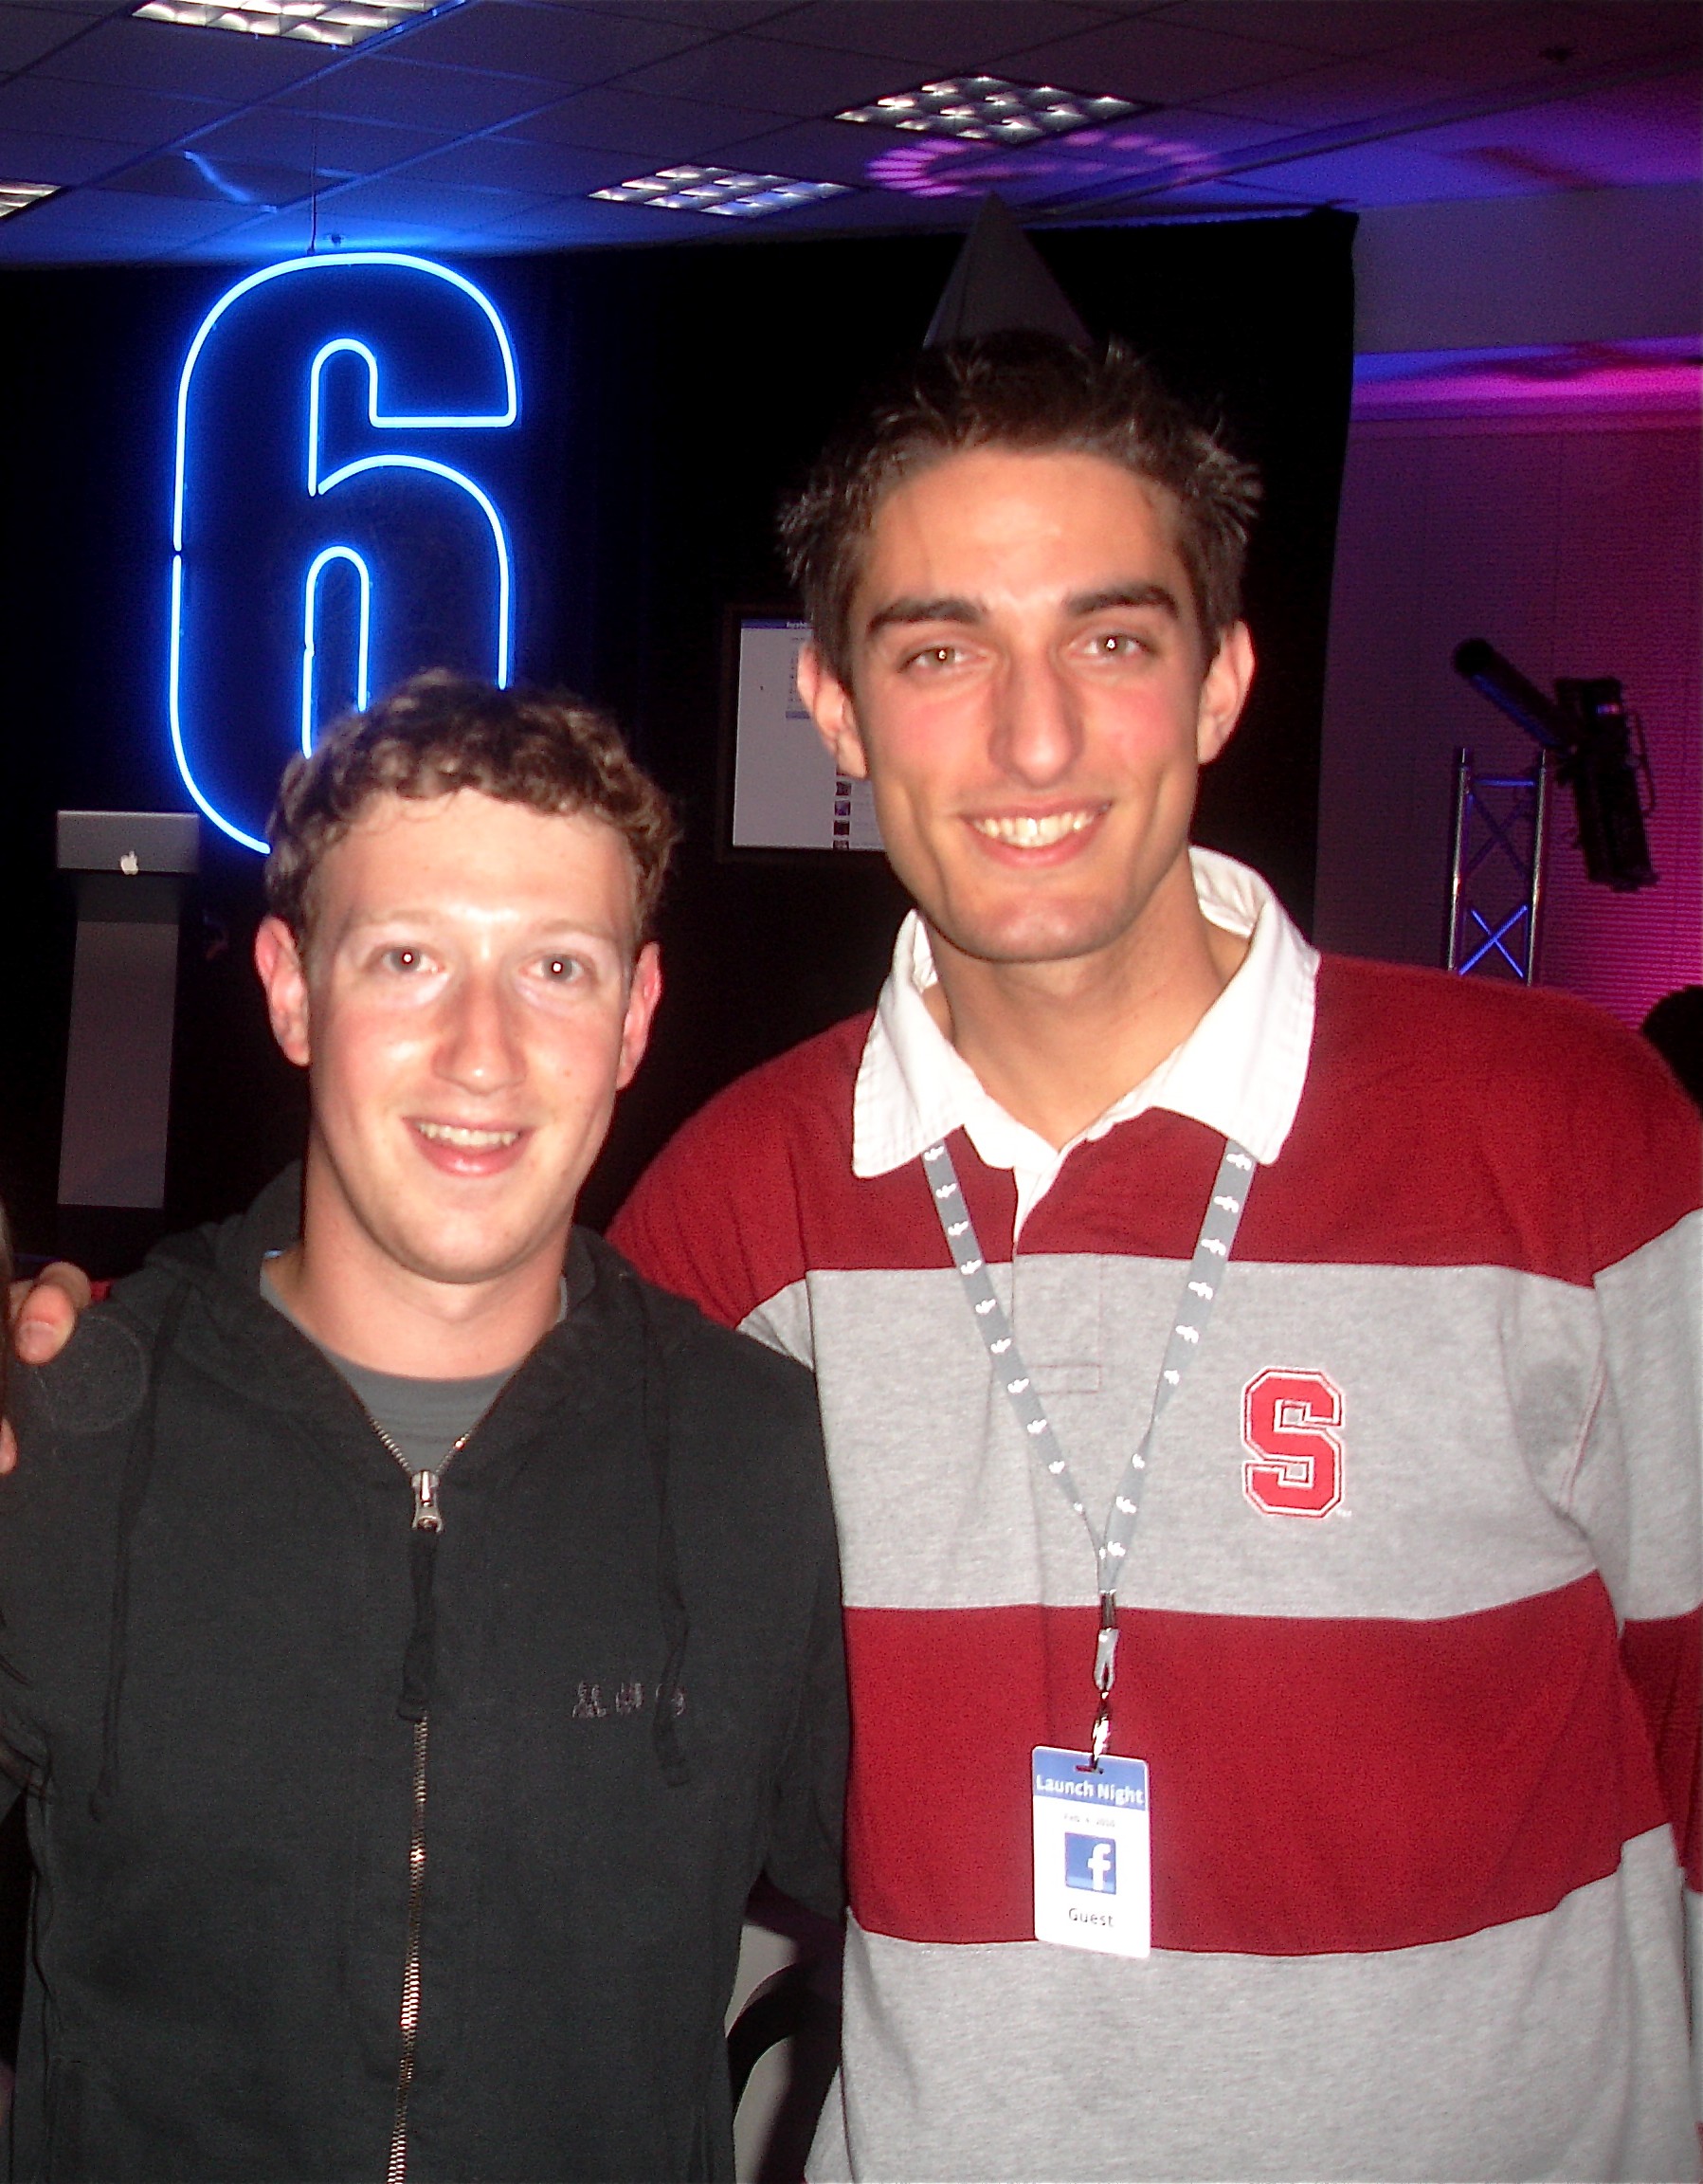 Me with Mark Zuckerberg